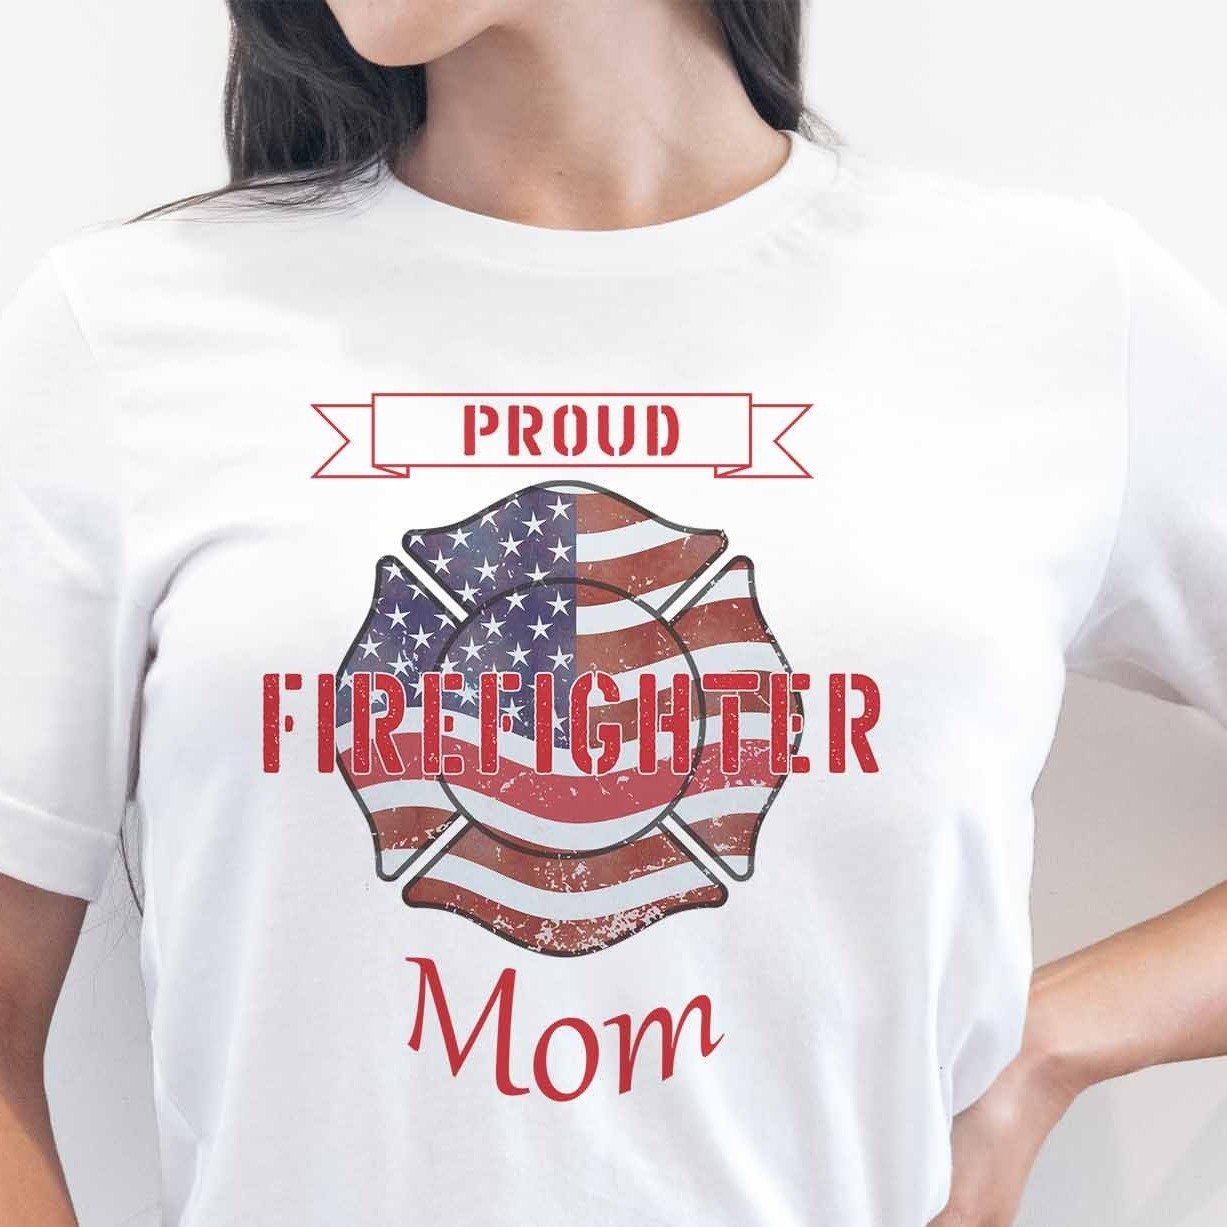 Proud Firefighter Mom - My Custom Tee Party